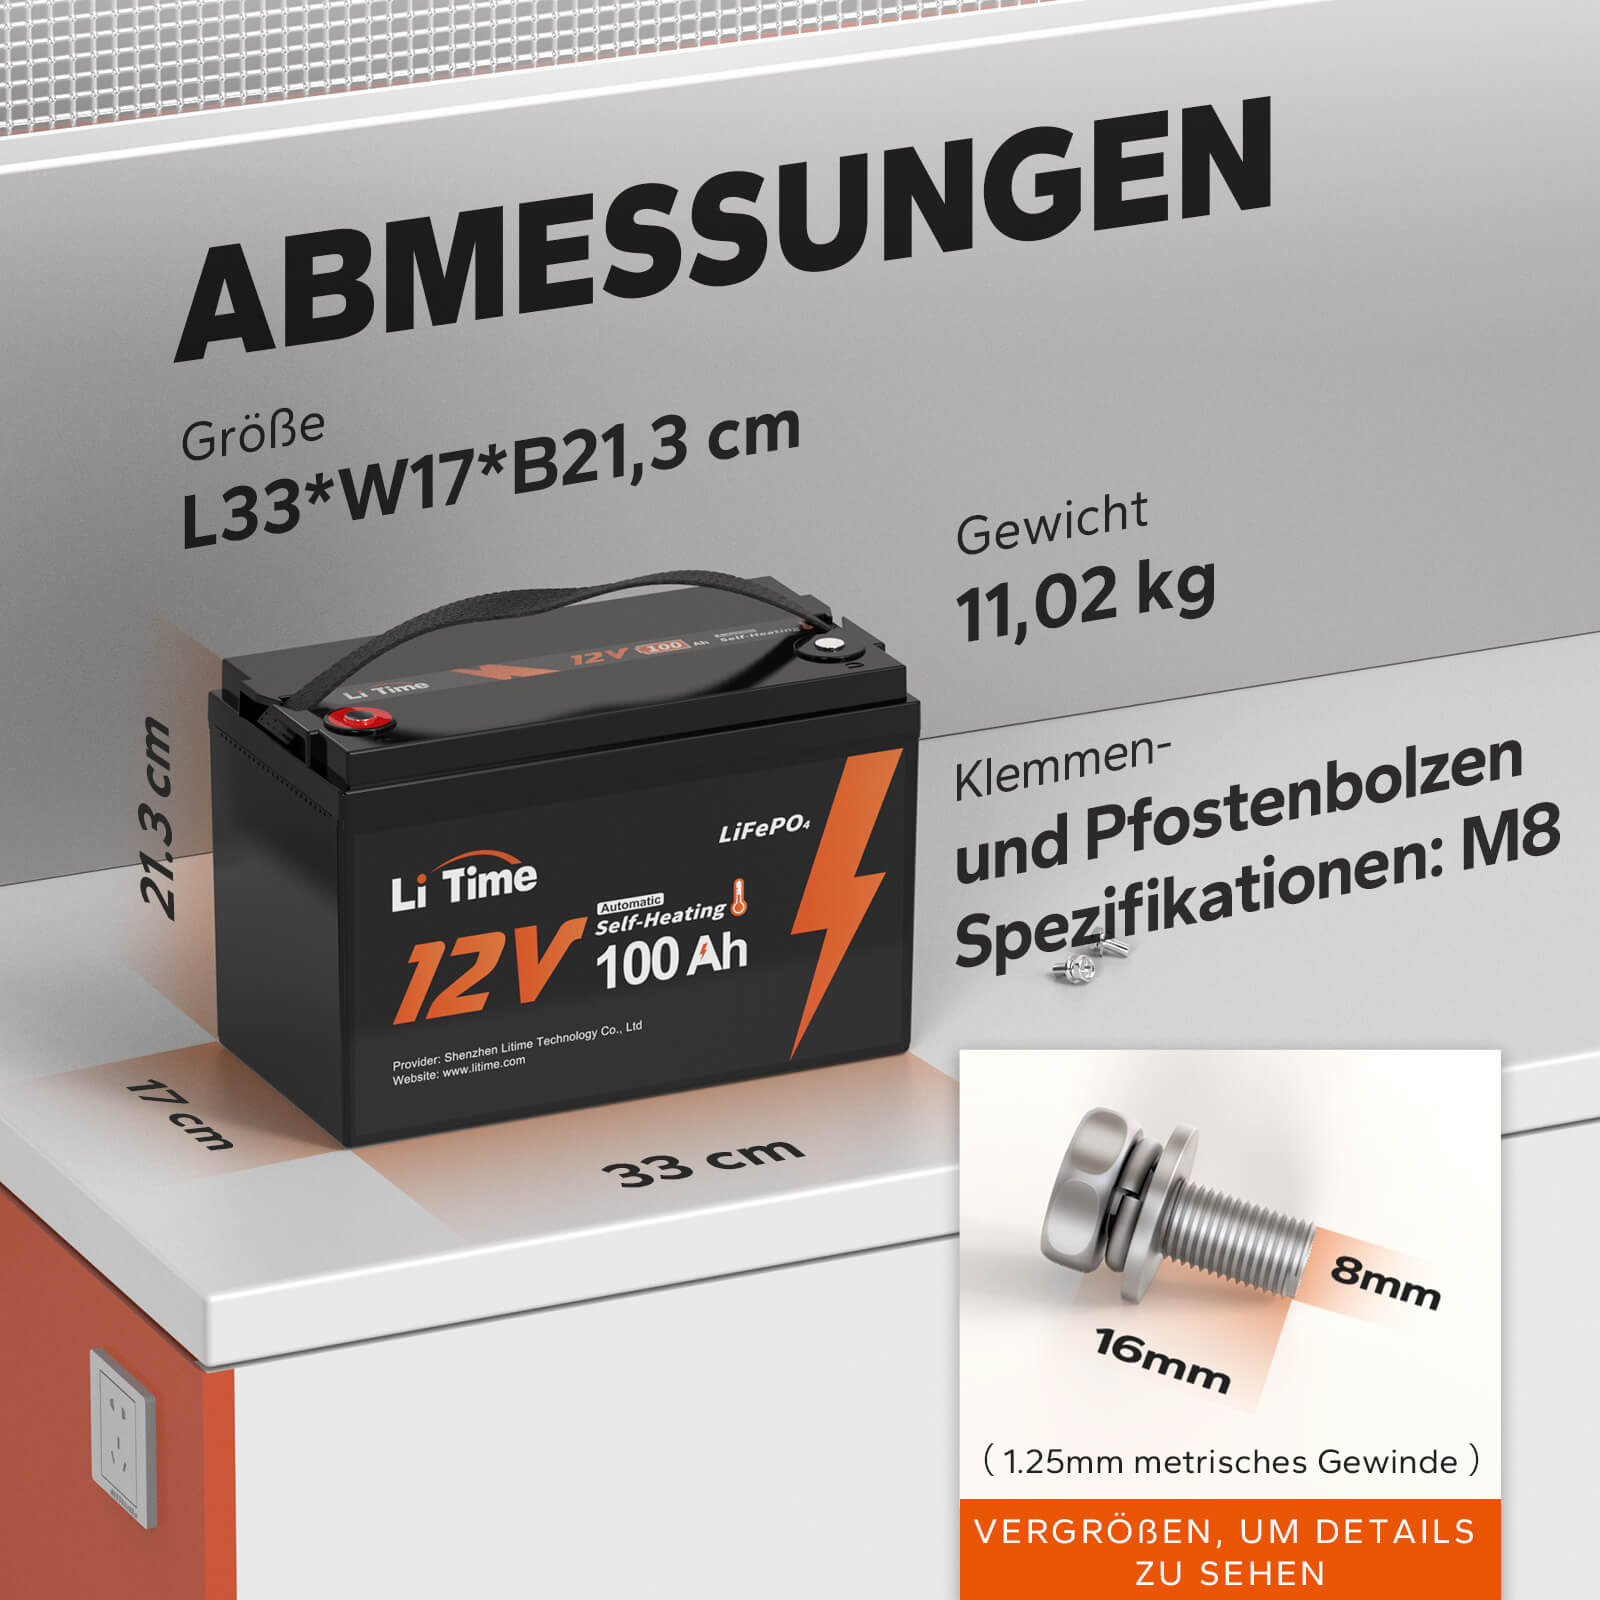 LiTime 12V 100Ah Selbstwärmende LiFePO4 Batterie mit 100A BMS, -20℃ bi –  LiTime-DE